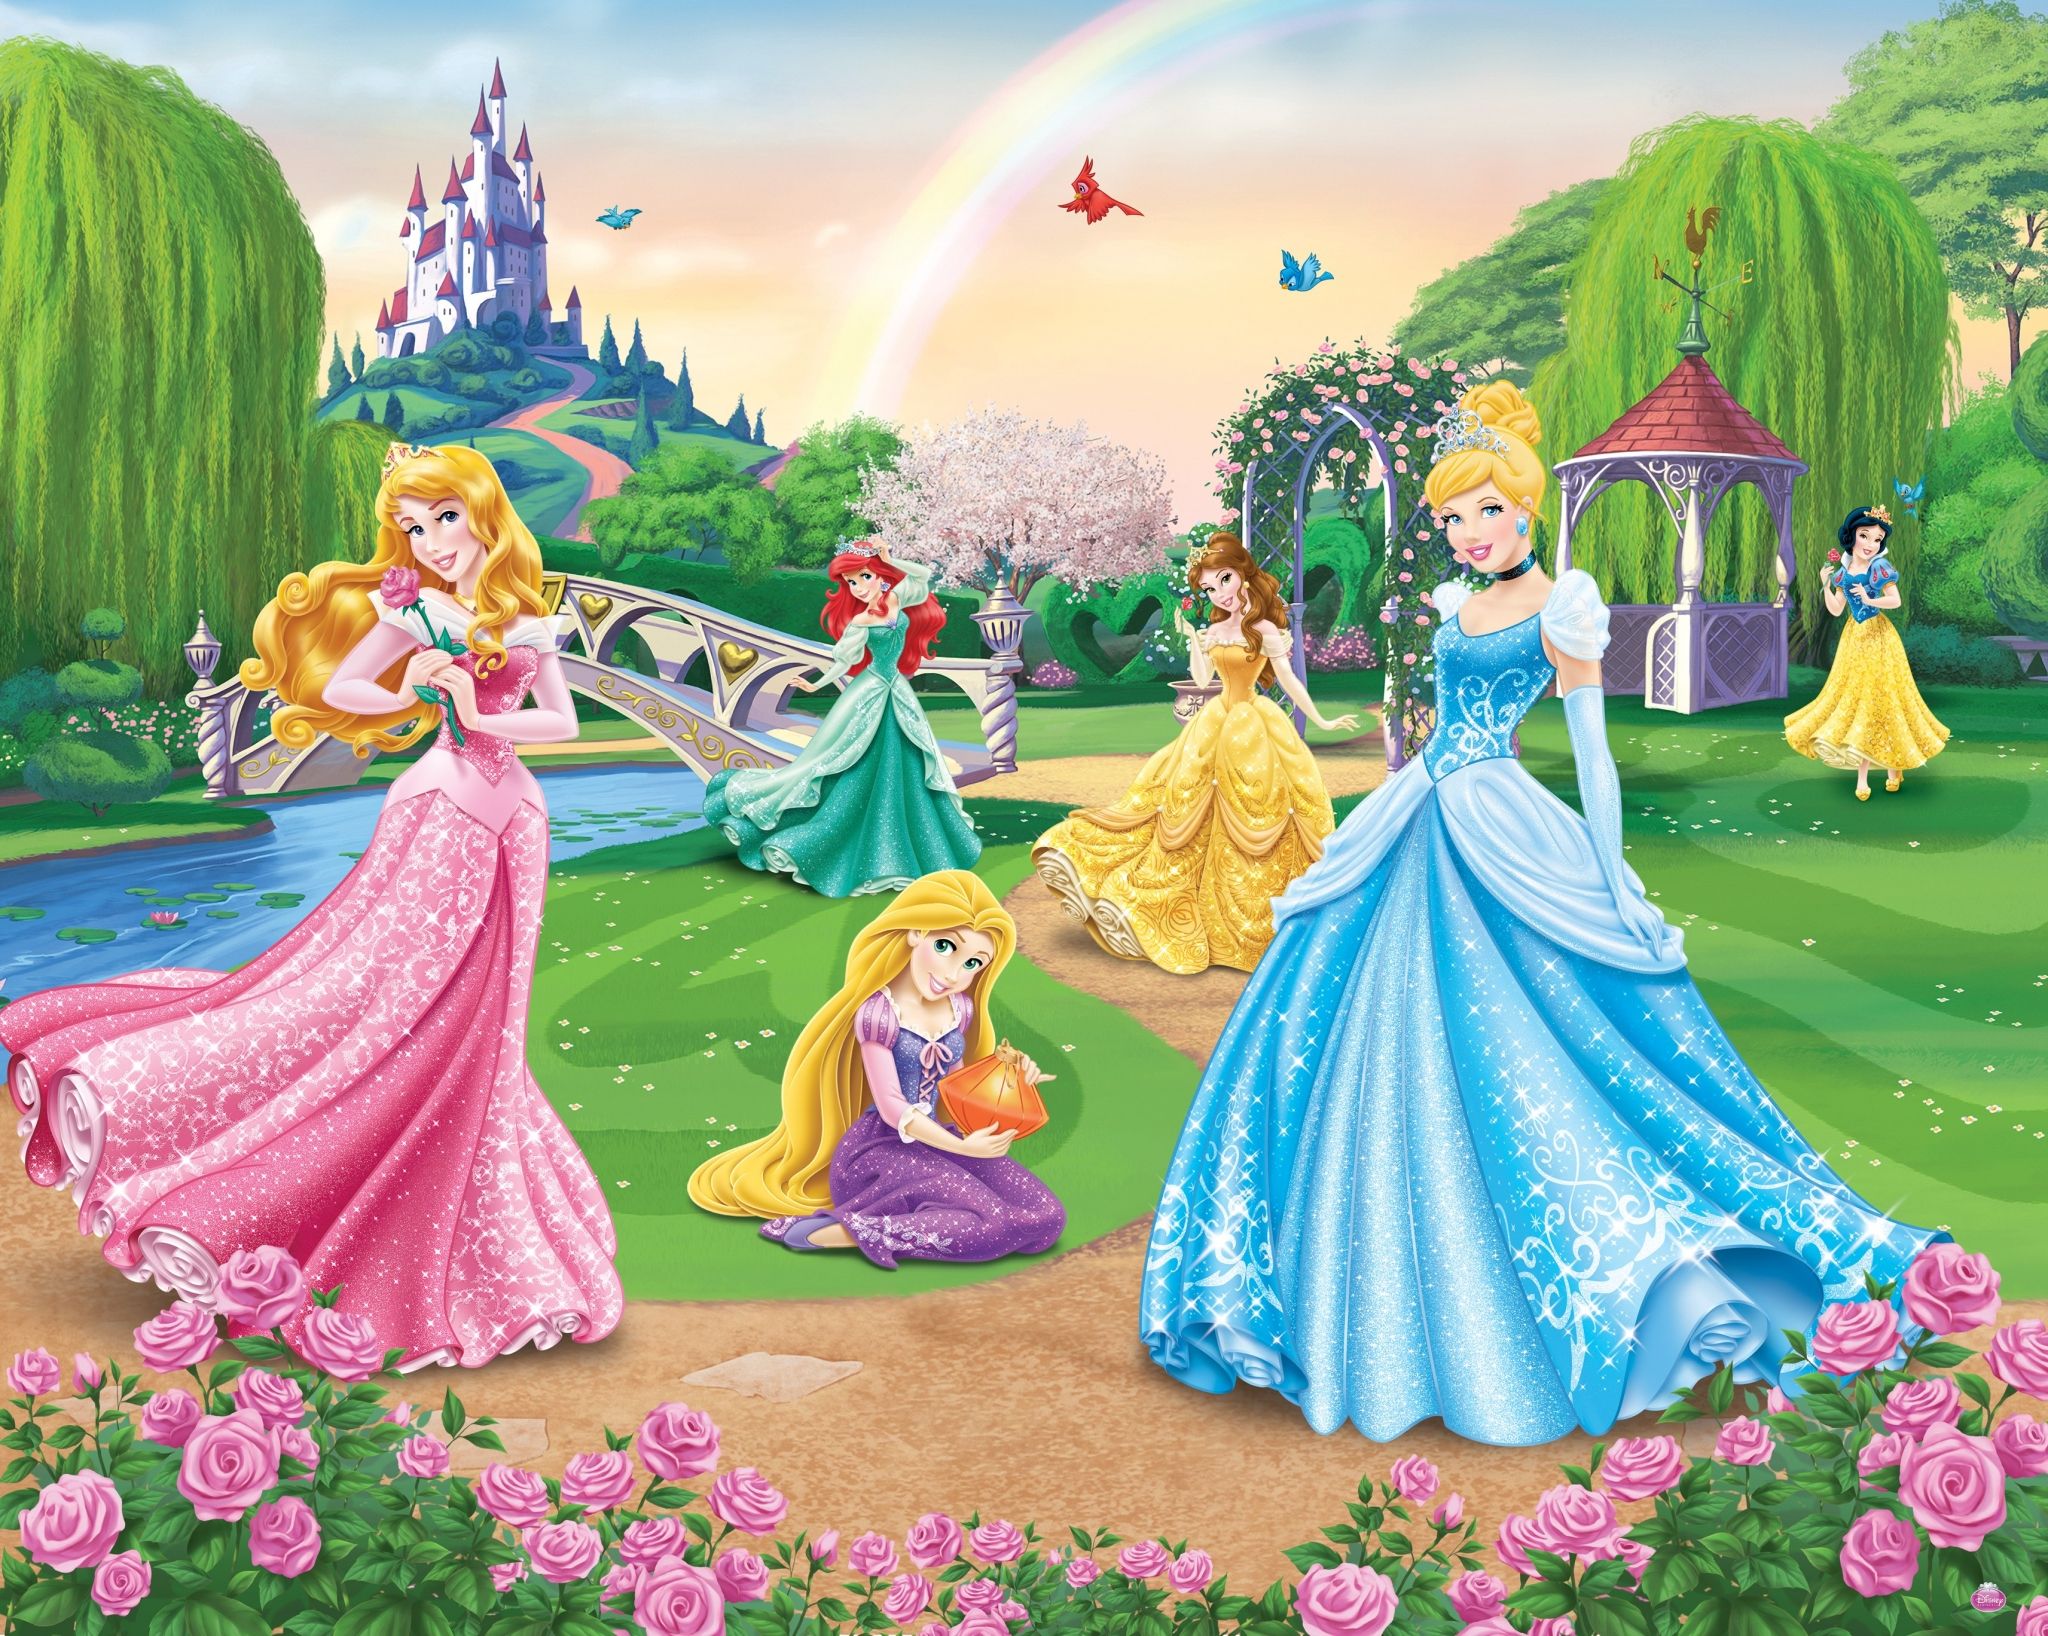 disney wallpaper for mac desktop. Disney princess wallpaper, Princess wallpaper, Princess mural